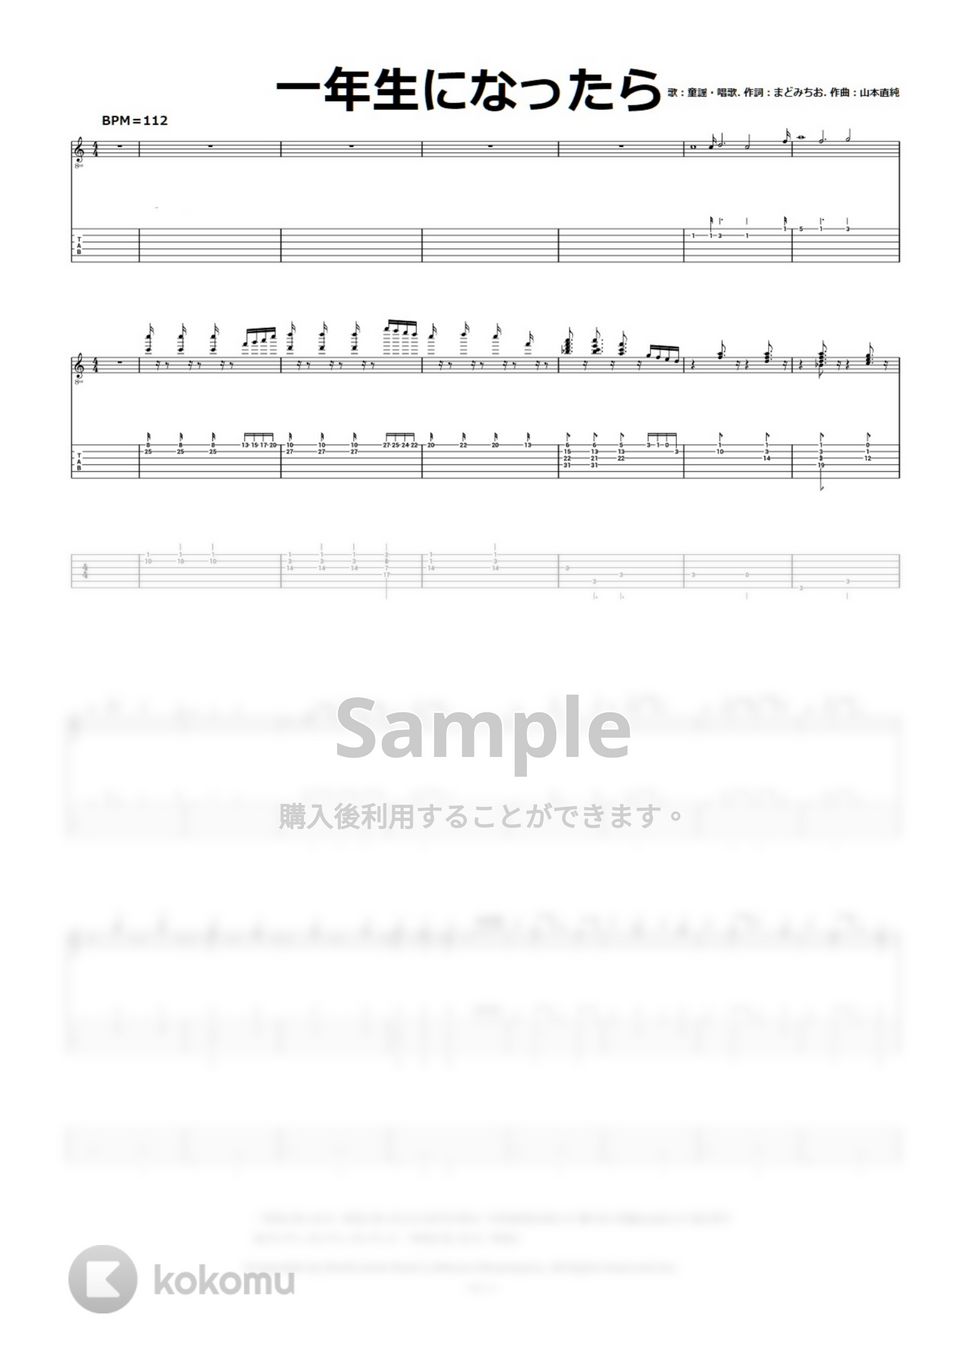 TOKYO FM 少年合唱団 - 一年生になったら (唱歌 作詞：まどみちお. 作曲：山本直純) by @MitsuruMinamiyama